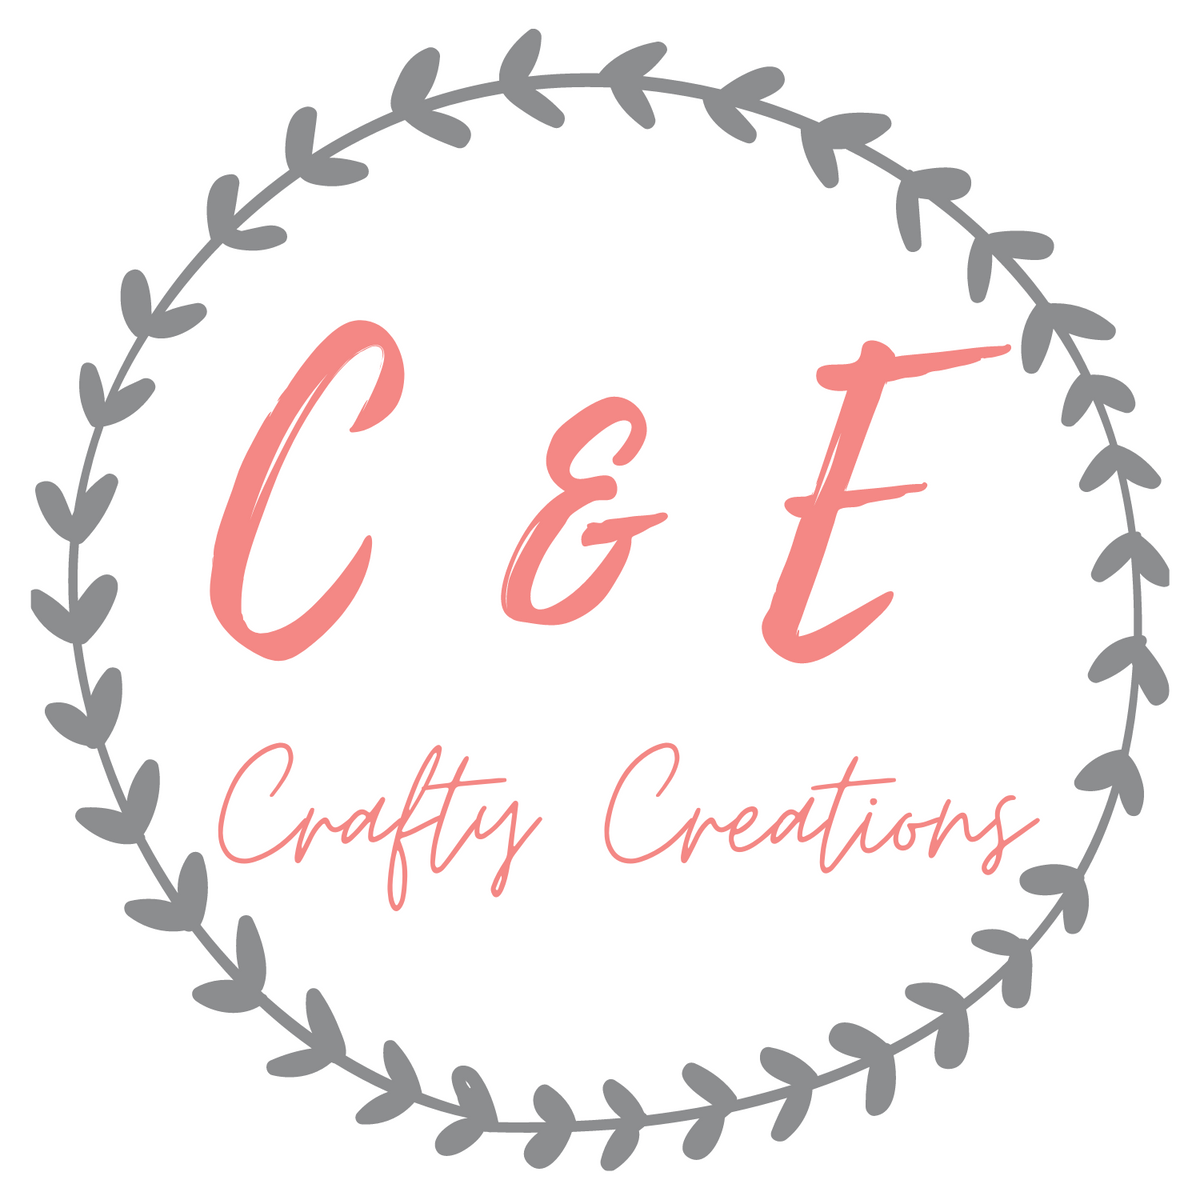 CECraftyCreations